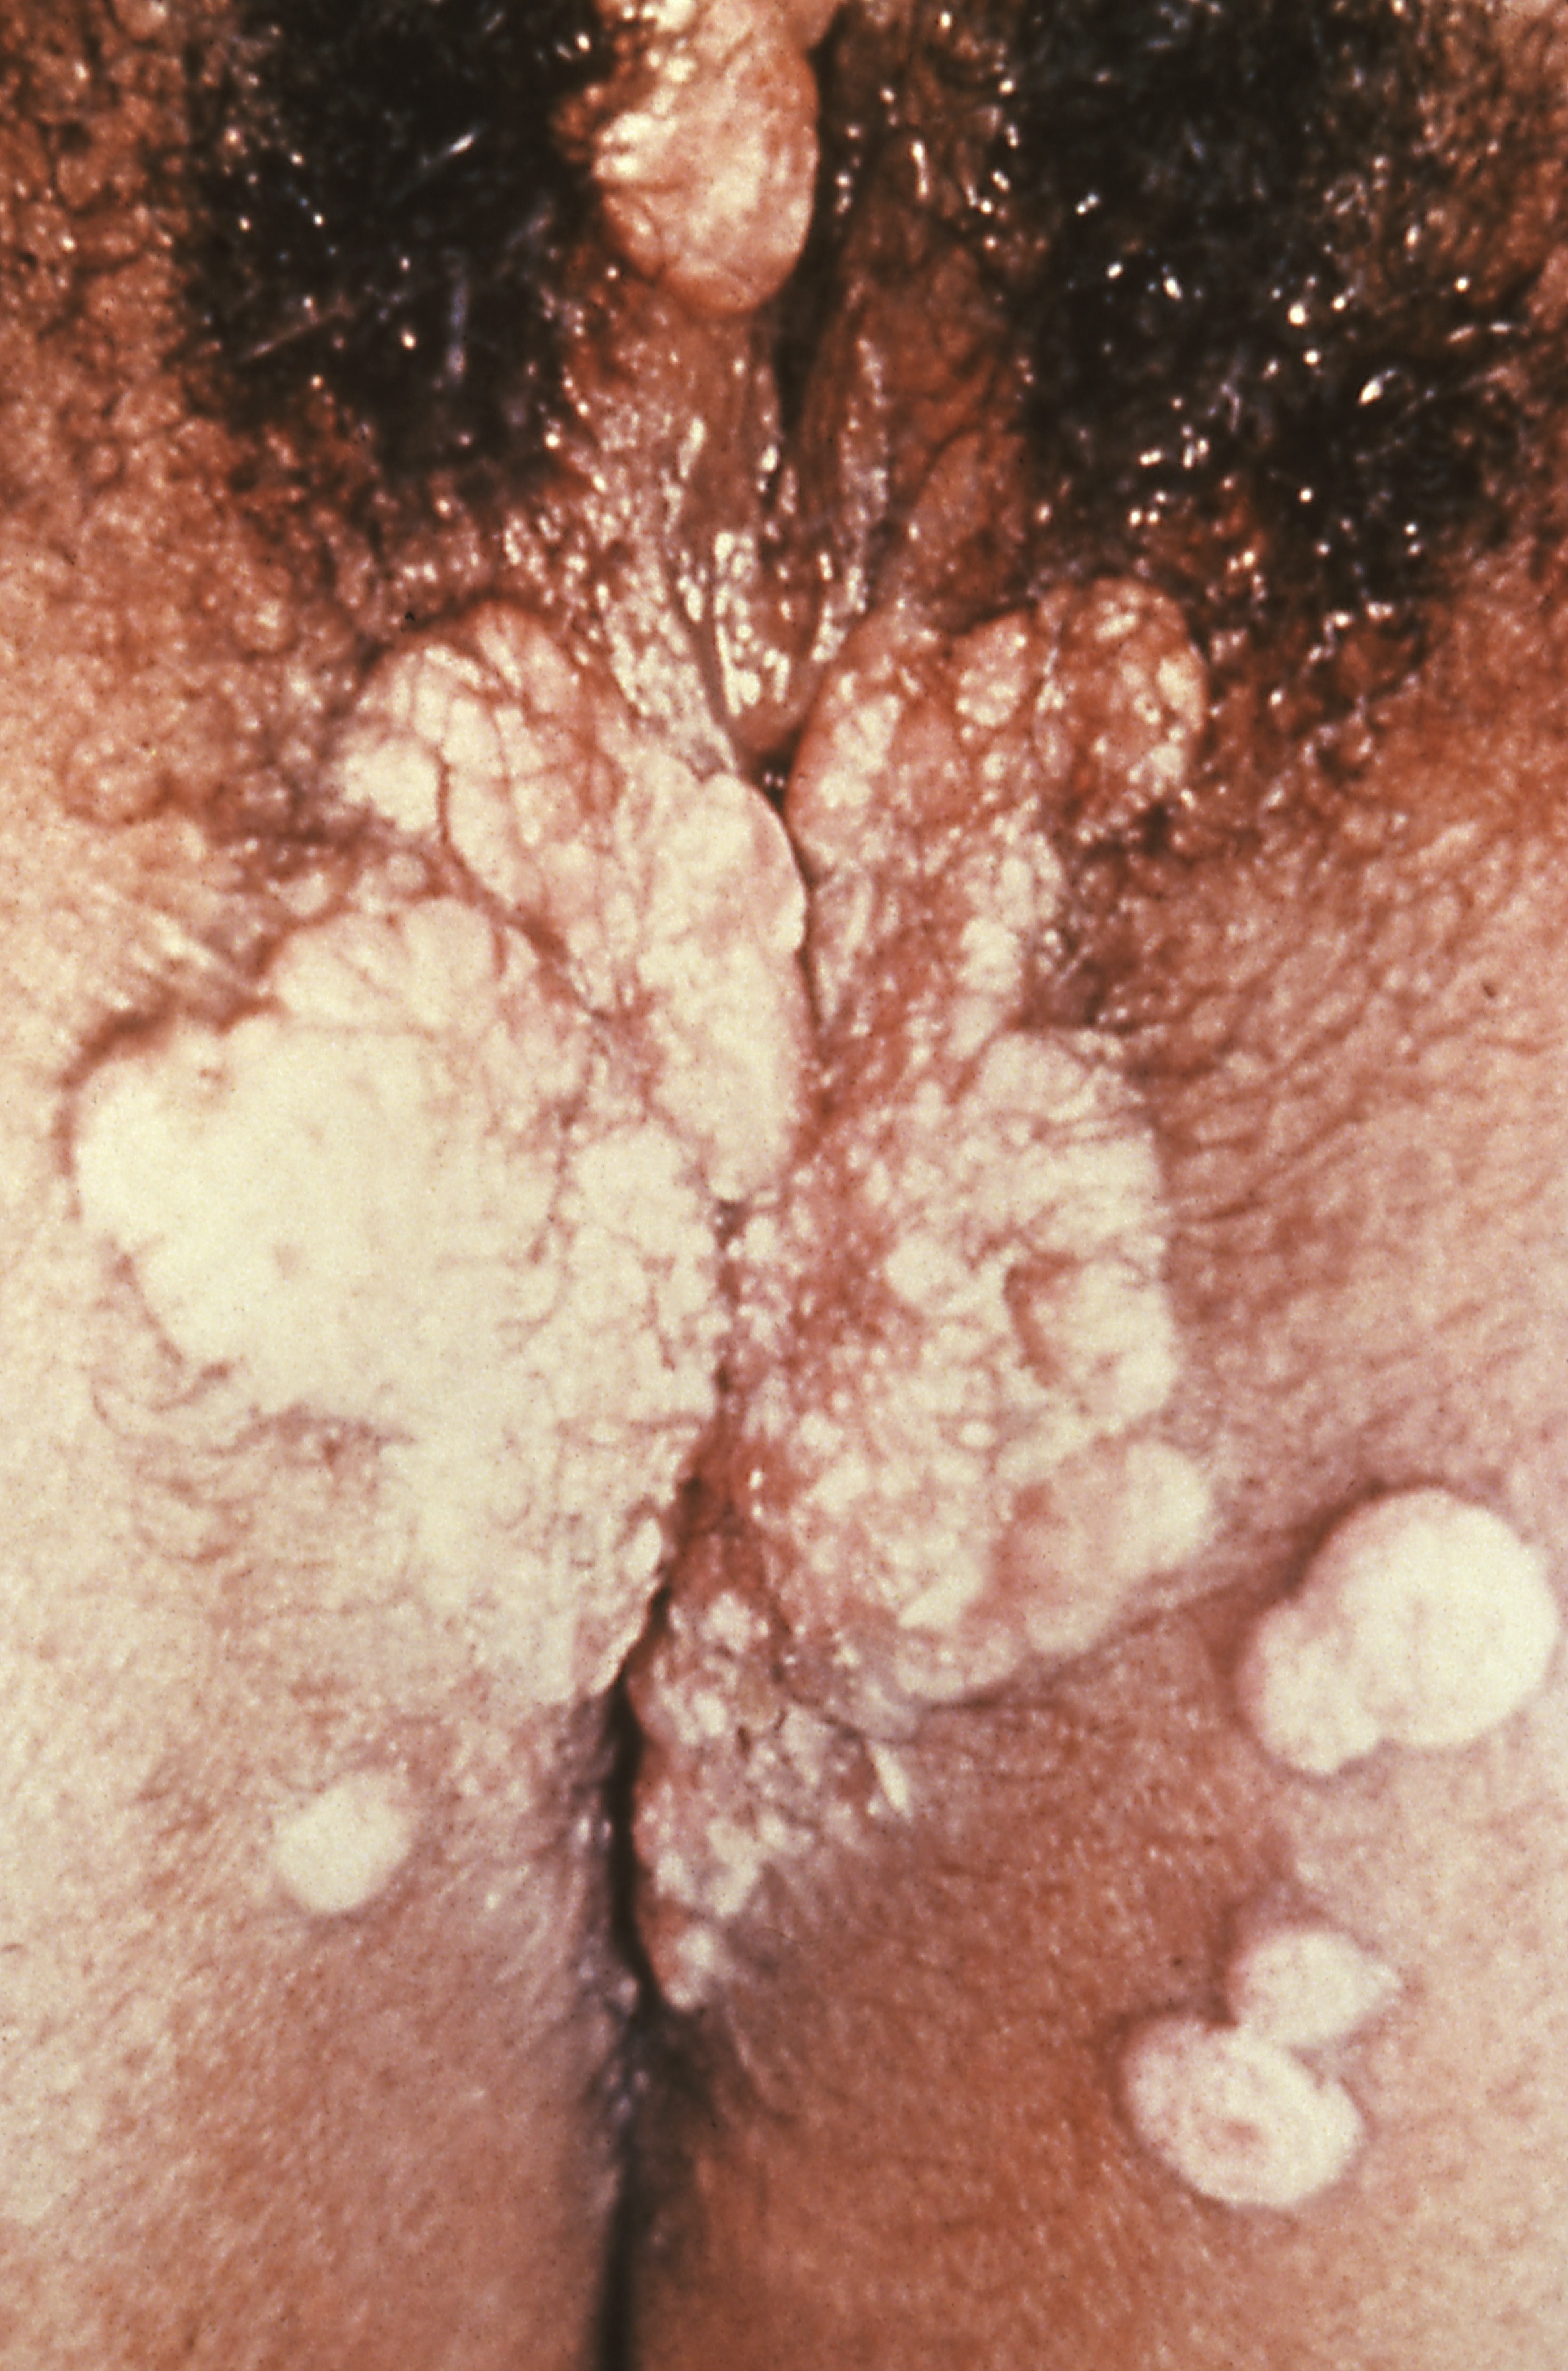 Secondary syphilis manifested perineal condylomata lata lesions